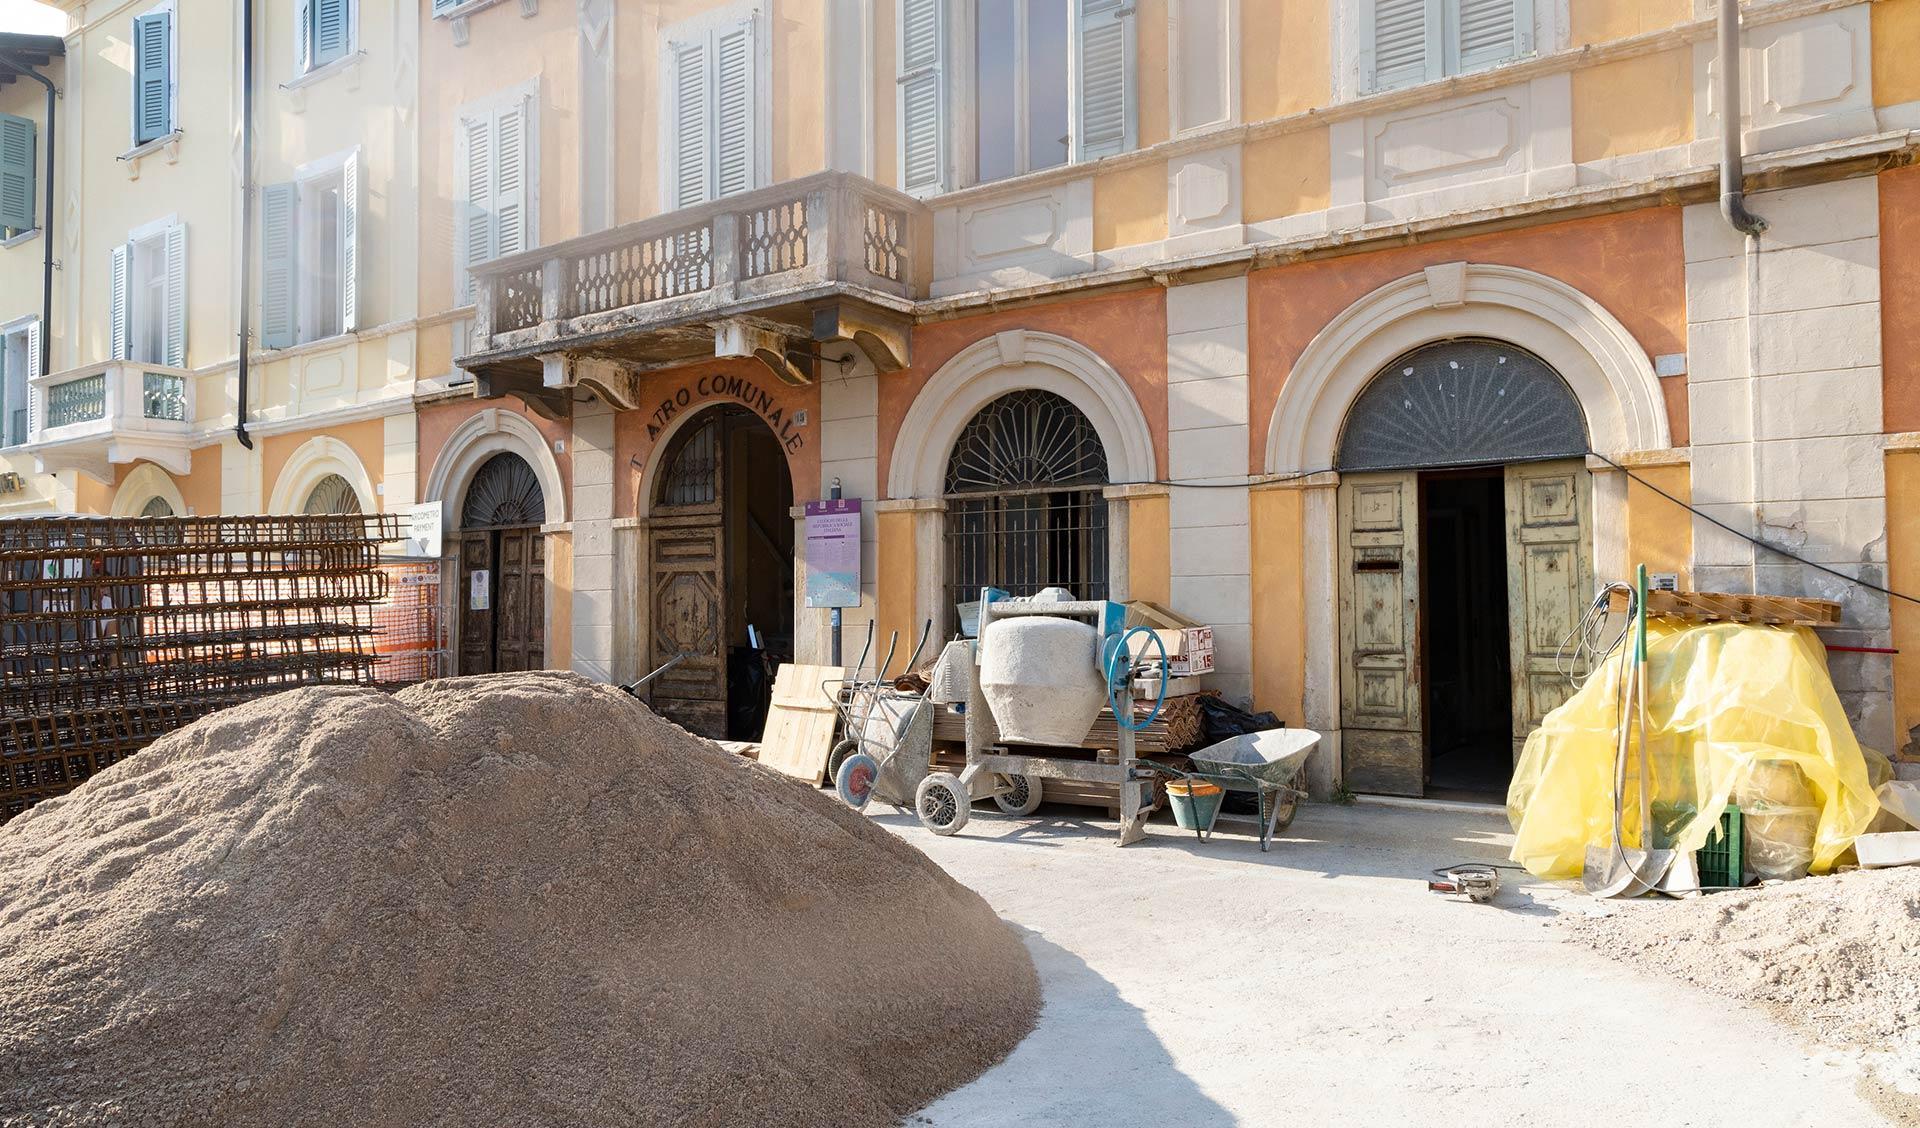 Restoration of the municipal theater of Salò